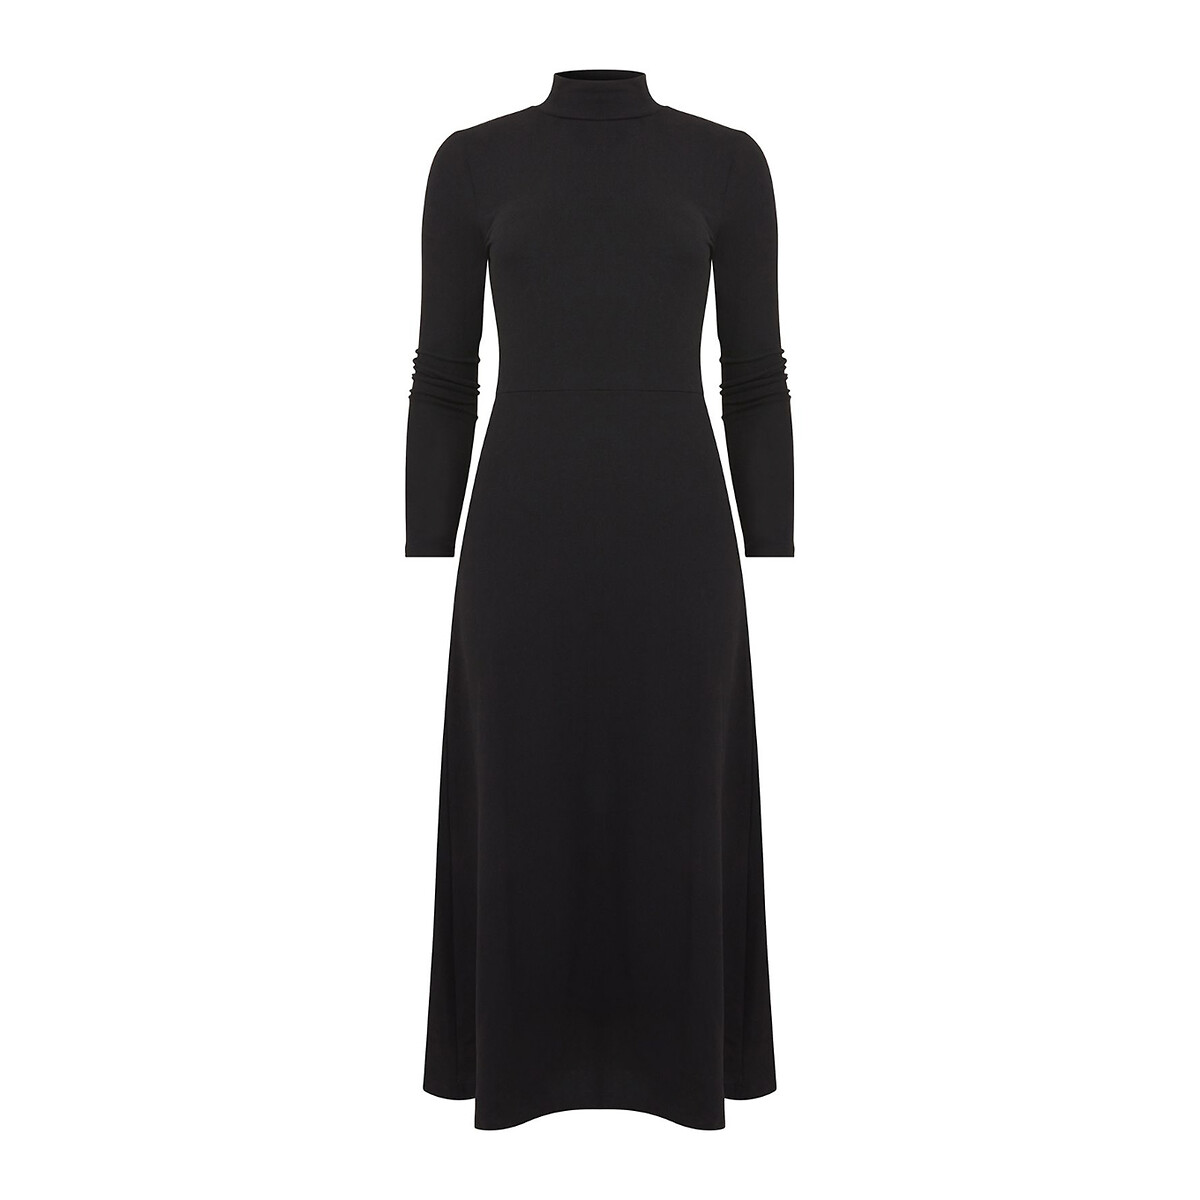 Jersey midi dress with high neck, black, Joe Browns | La Redoute